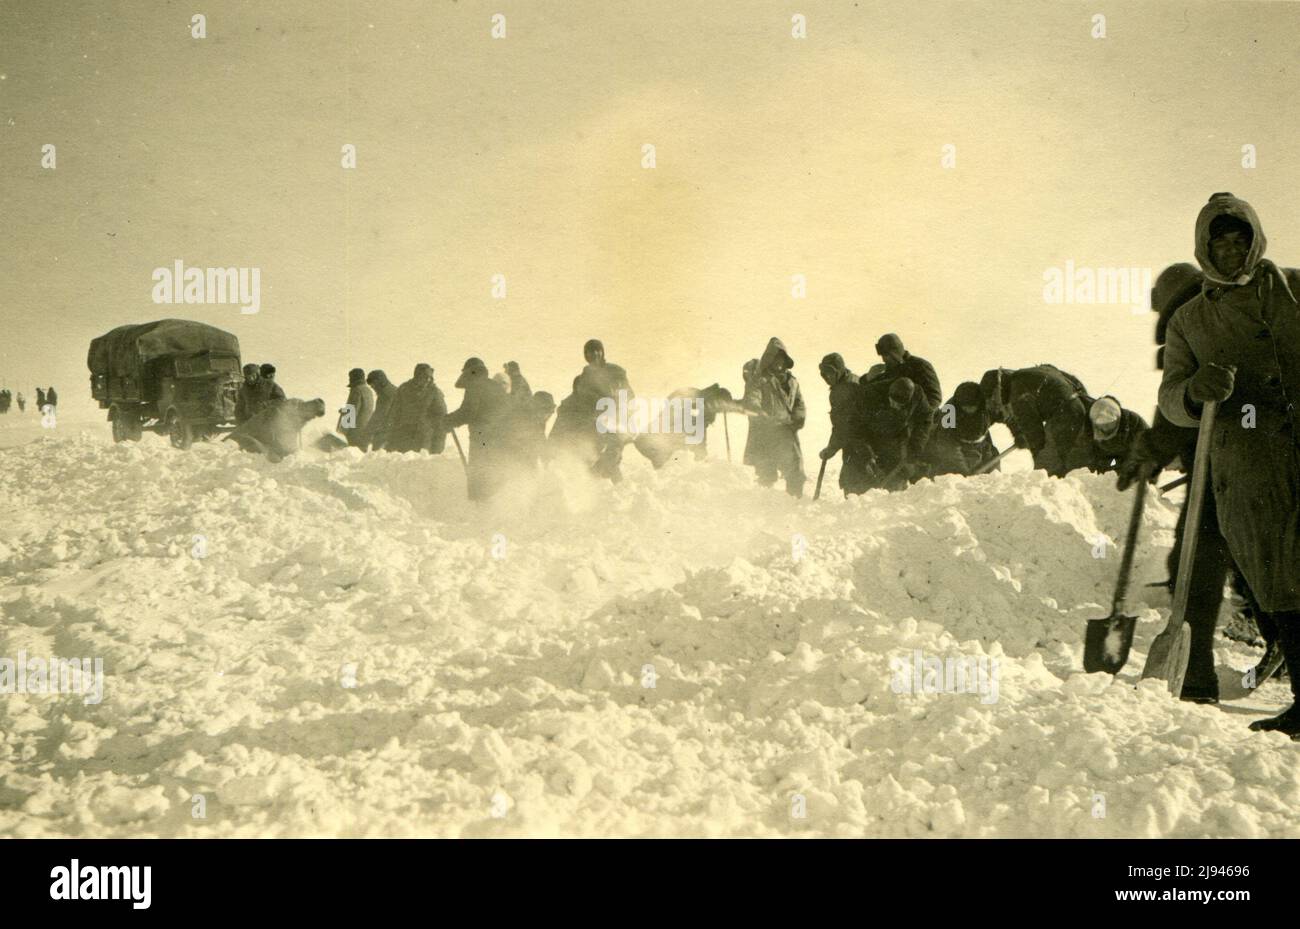 WWII WW2 german soldiers invades URSS - november 1942, wehrmacht - Operation Barbarossa - near Voronez Russia - snow storm Stock Photo